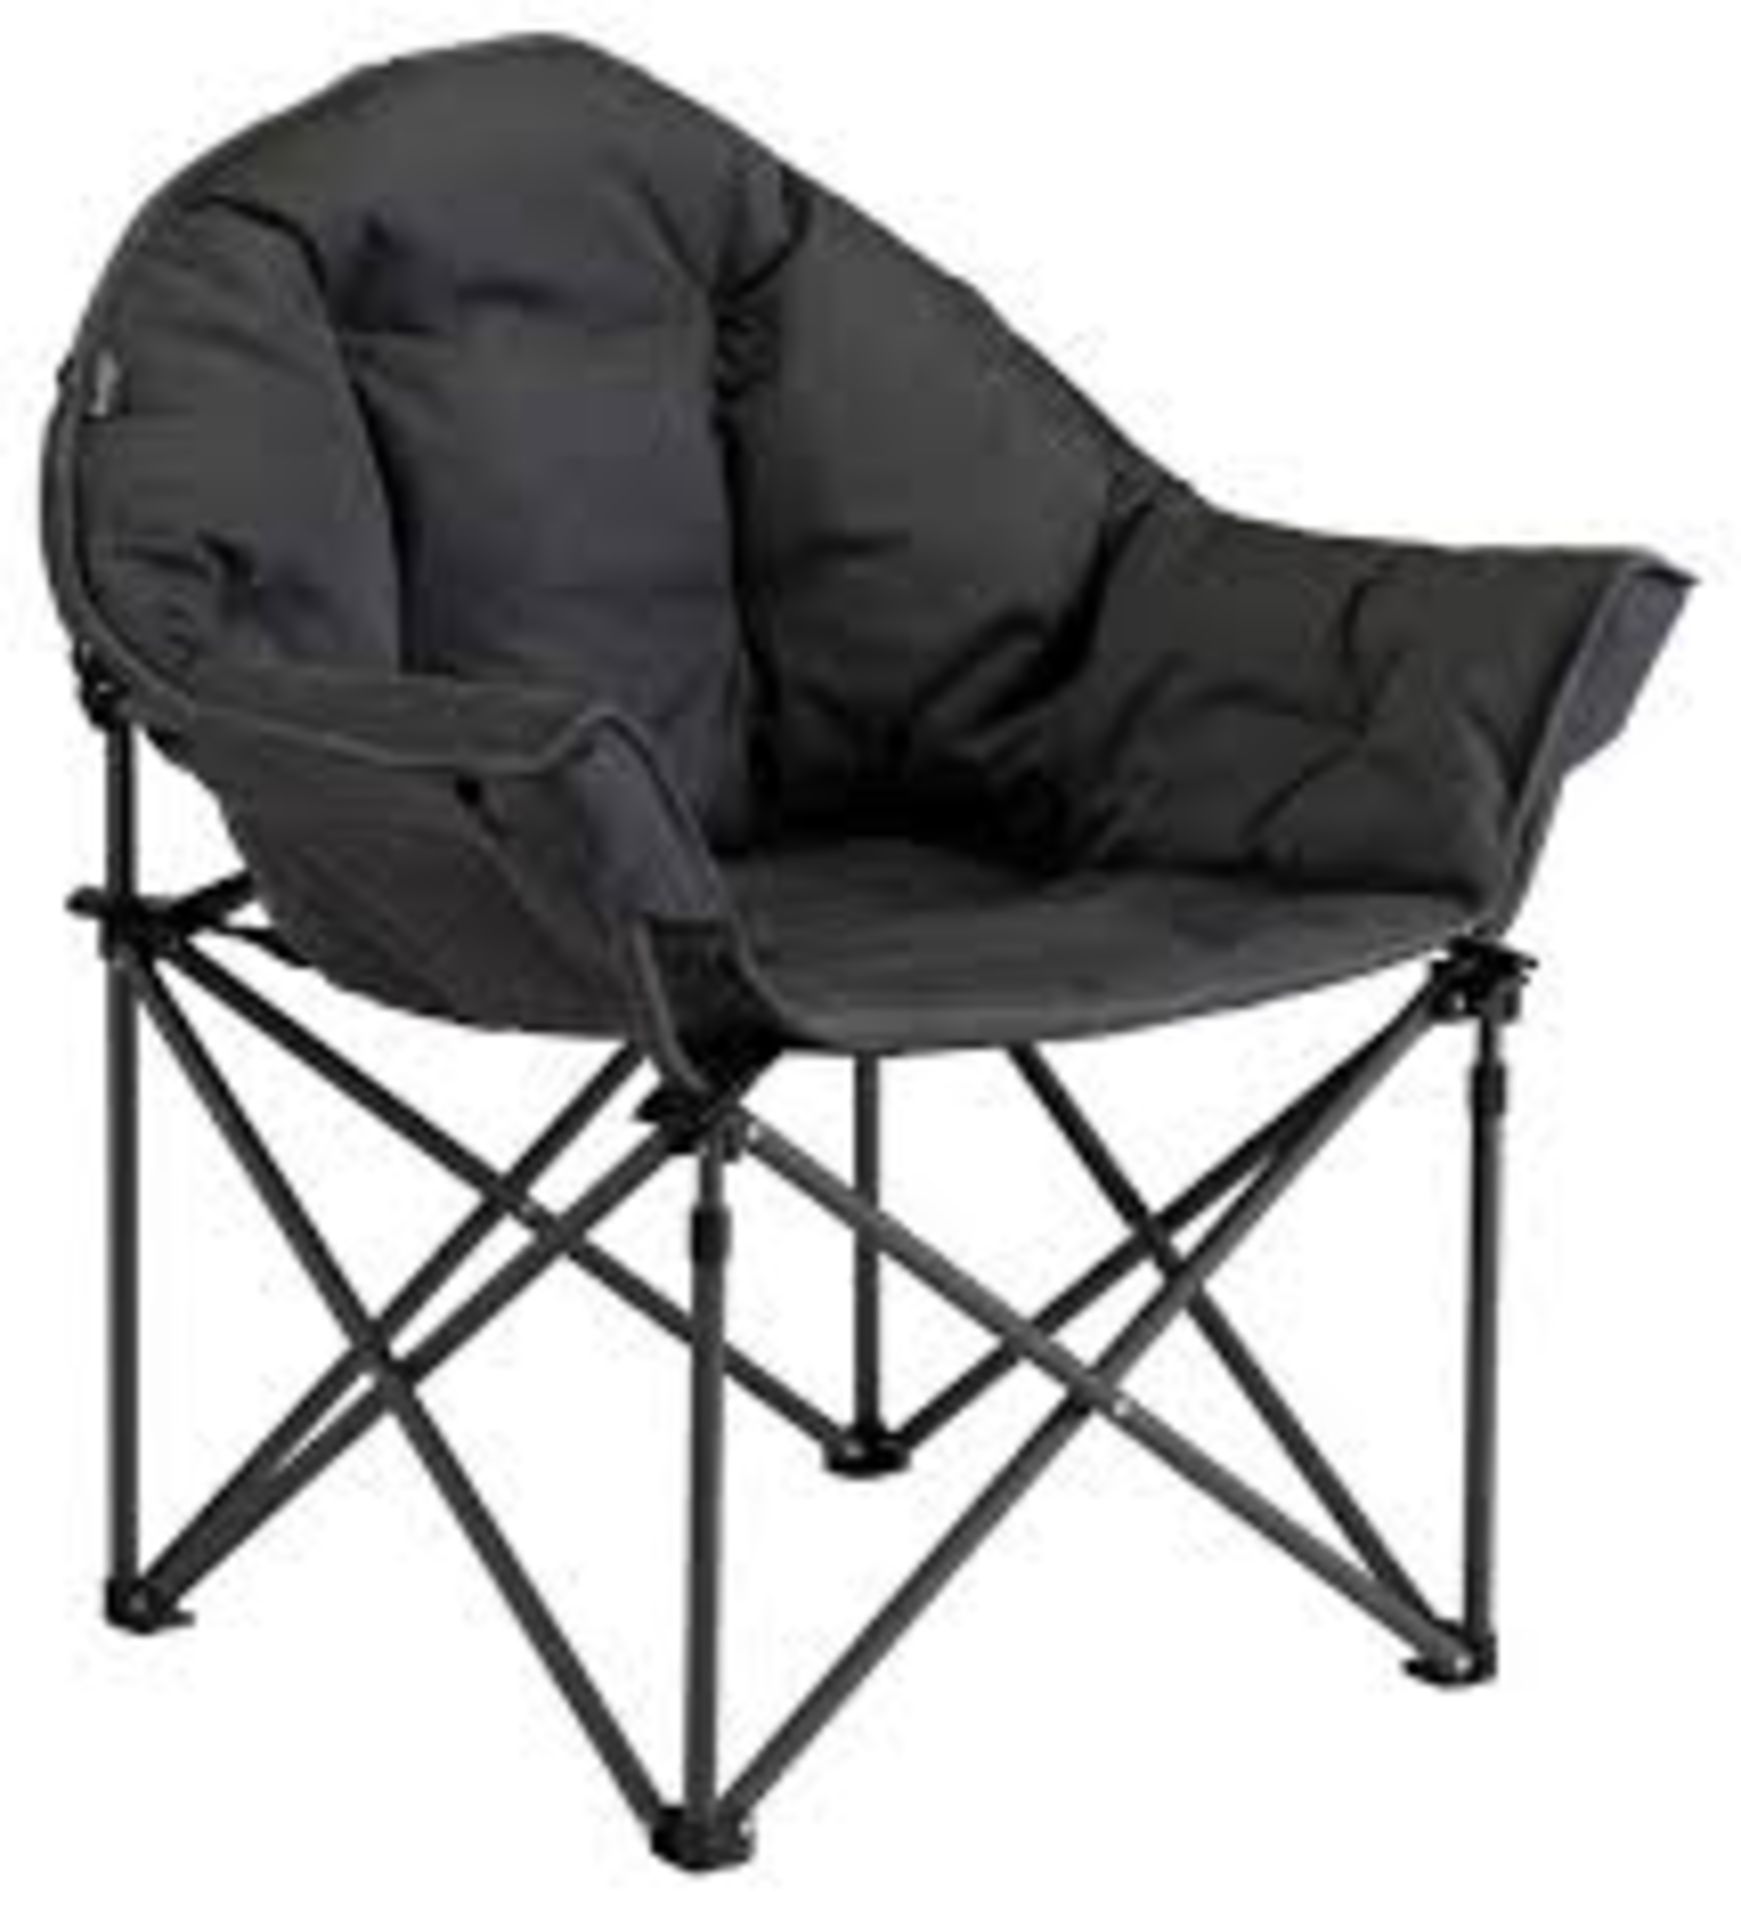 Vango Titan 2 Oversized Chair - Excalibur. - Er22. The Vango Titan 2 Oversized camping chair